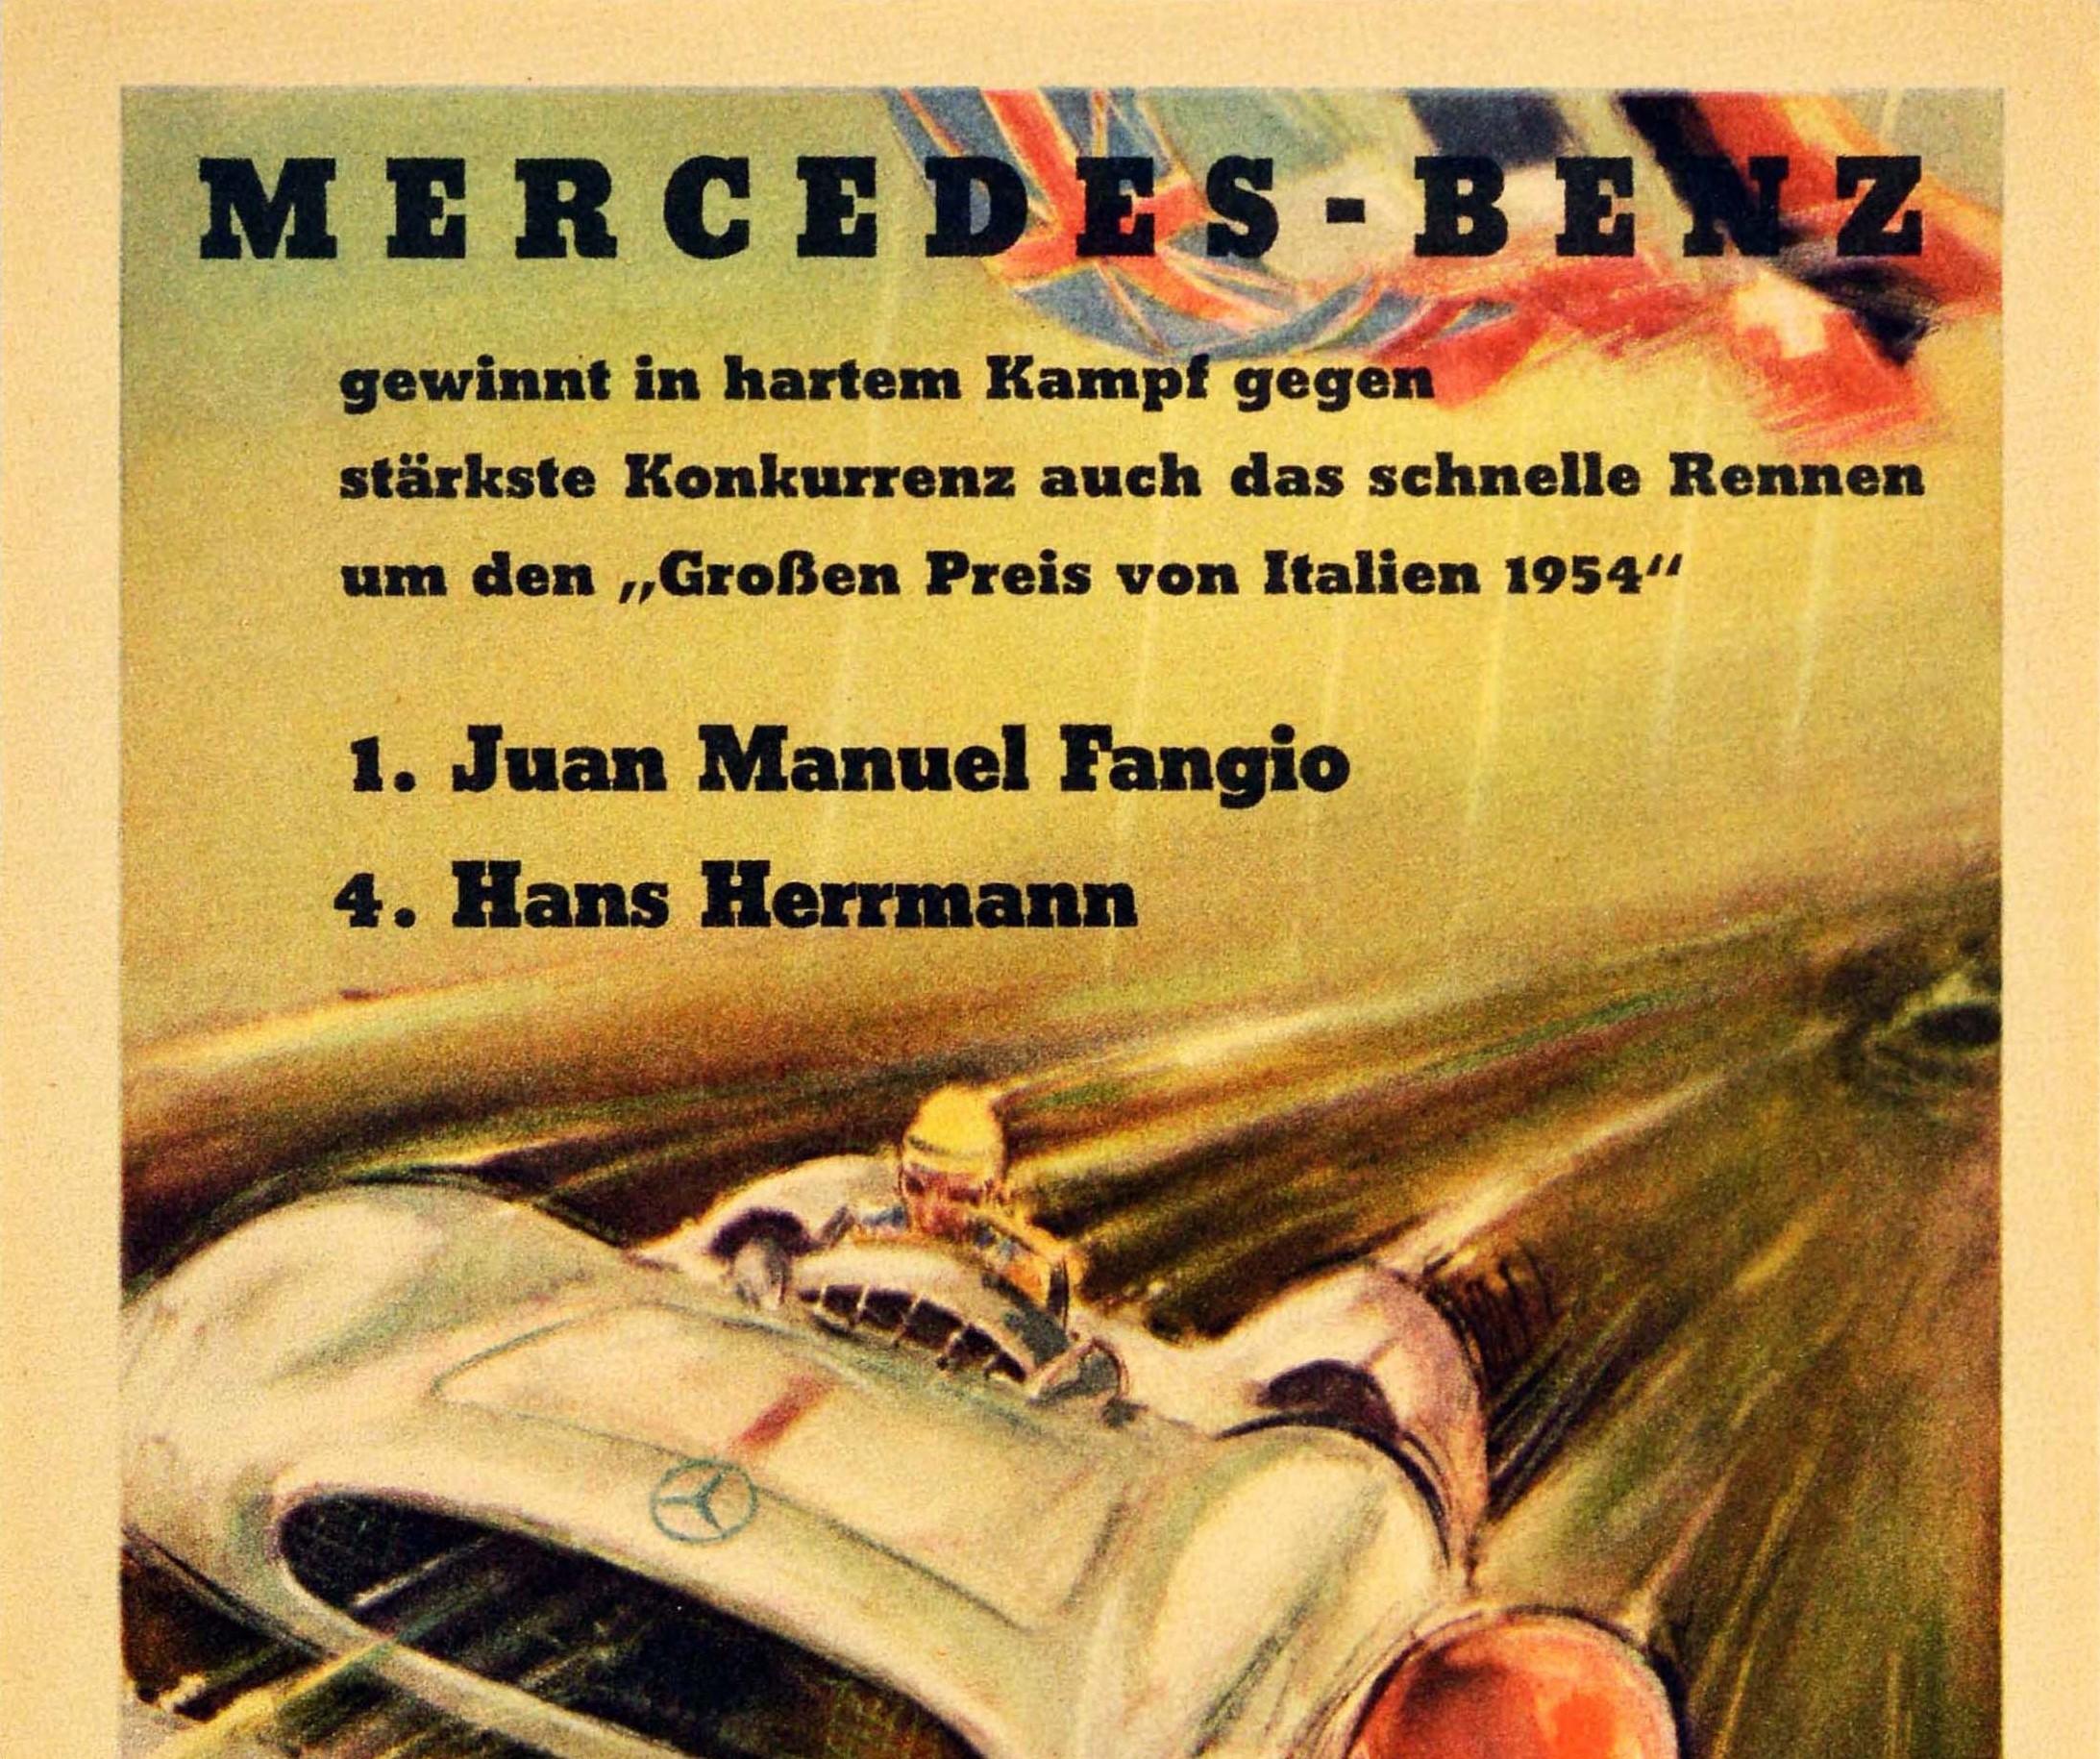 MERCEDES BENZ RACING 1954/ FANGIO METAL ADVERTISING SIGN 30x20cm EMBOSSED 3D 